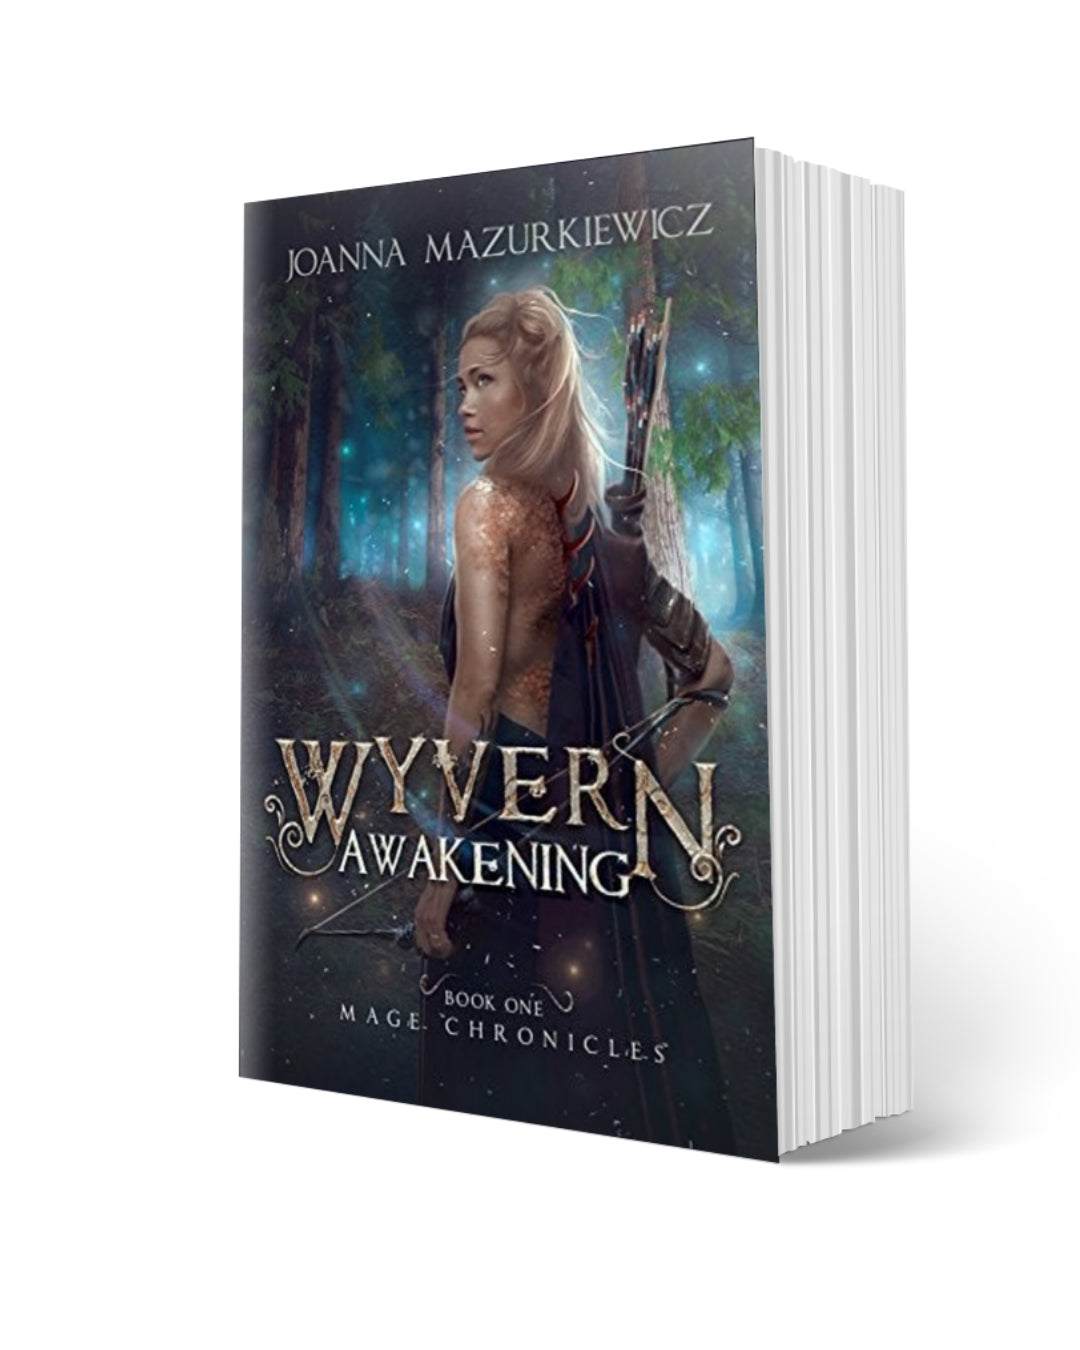 Paperback Copy of Wyvern Awakening (Mage Chronicles #1)